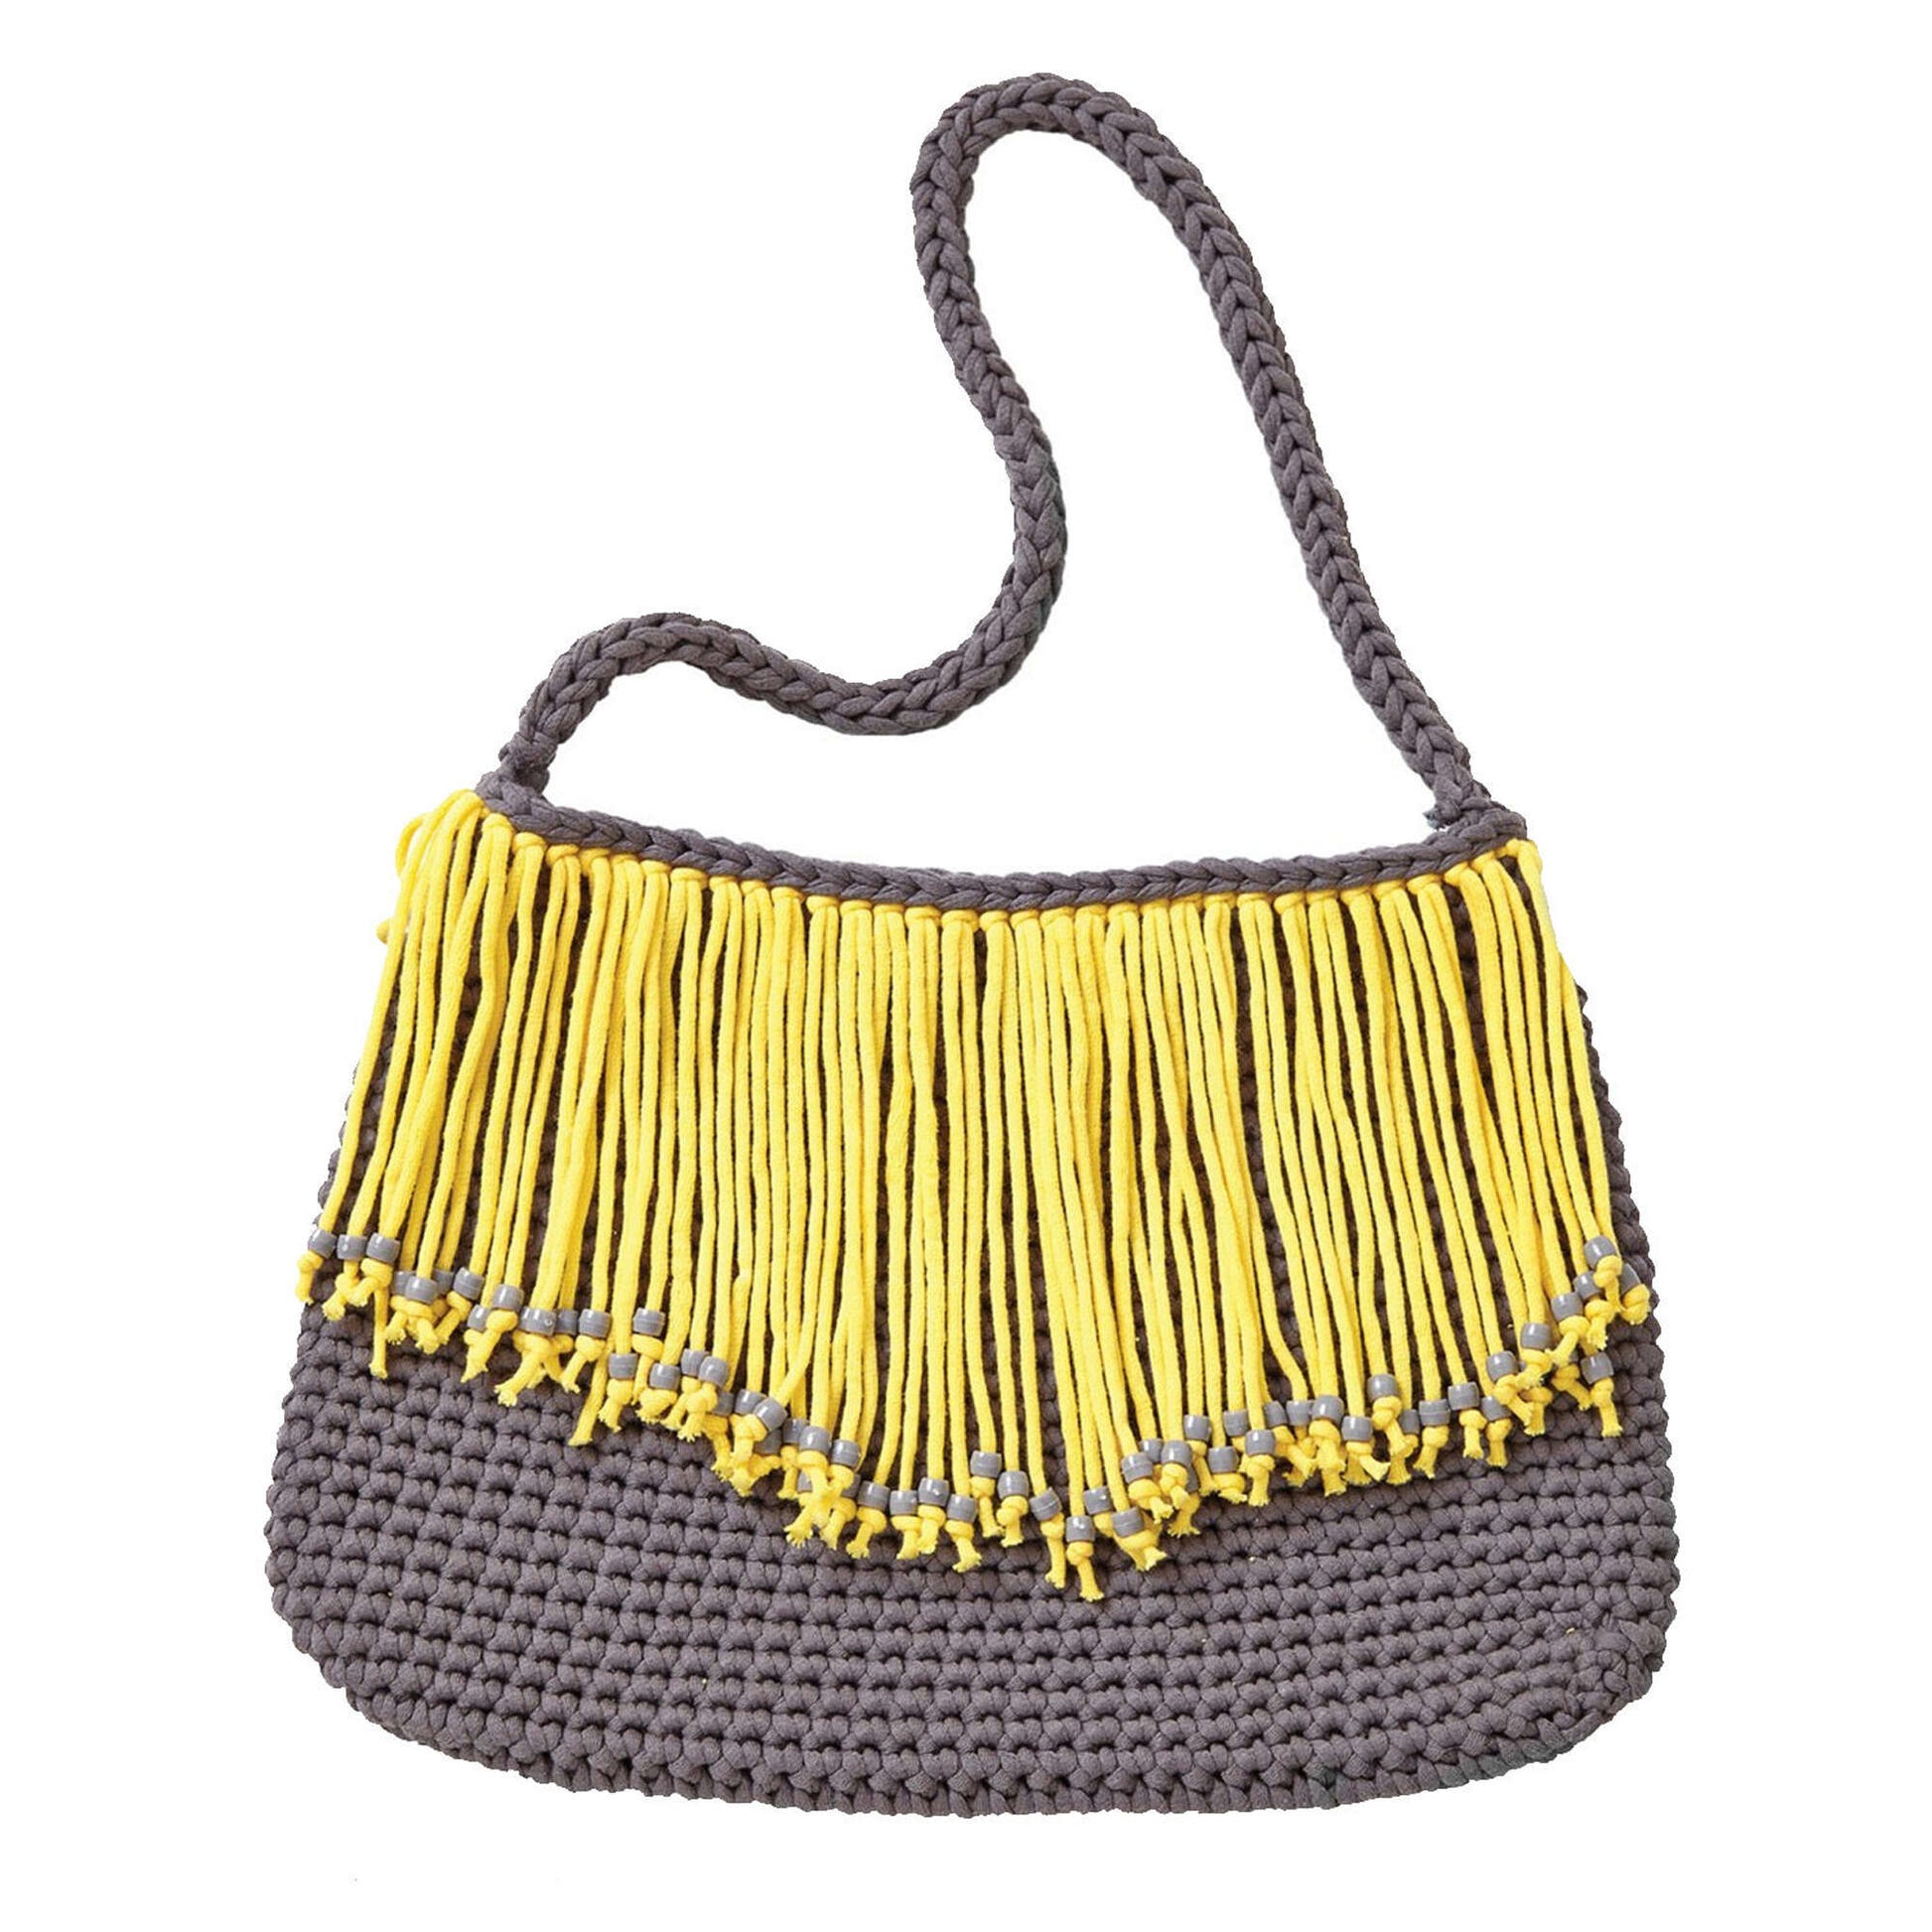 Bernat Fringe Benefits Bag Crochet Accessory made in Bernat Maker Fashion yarn